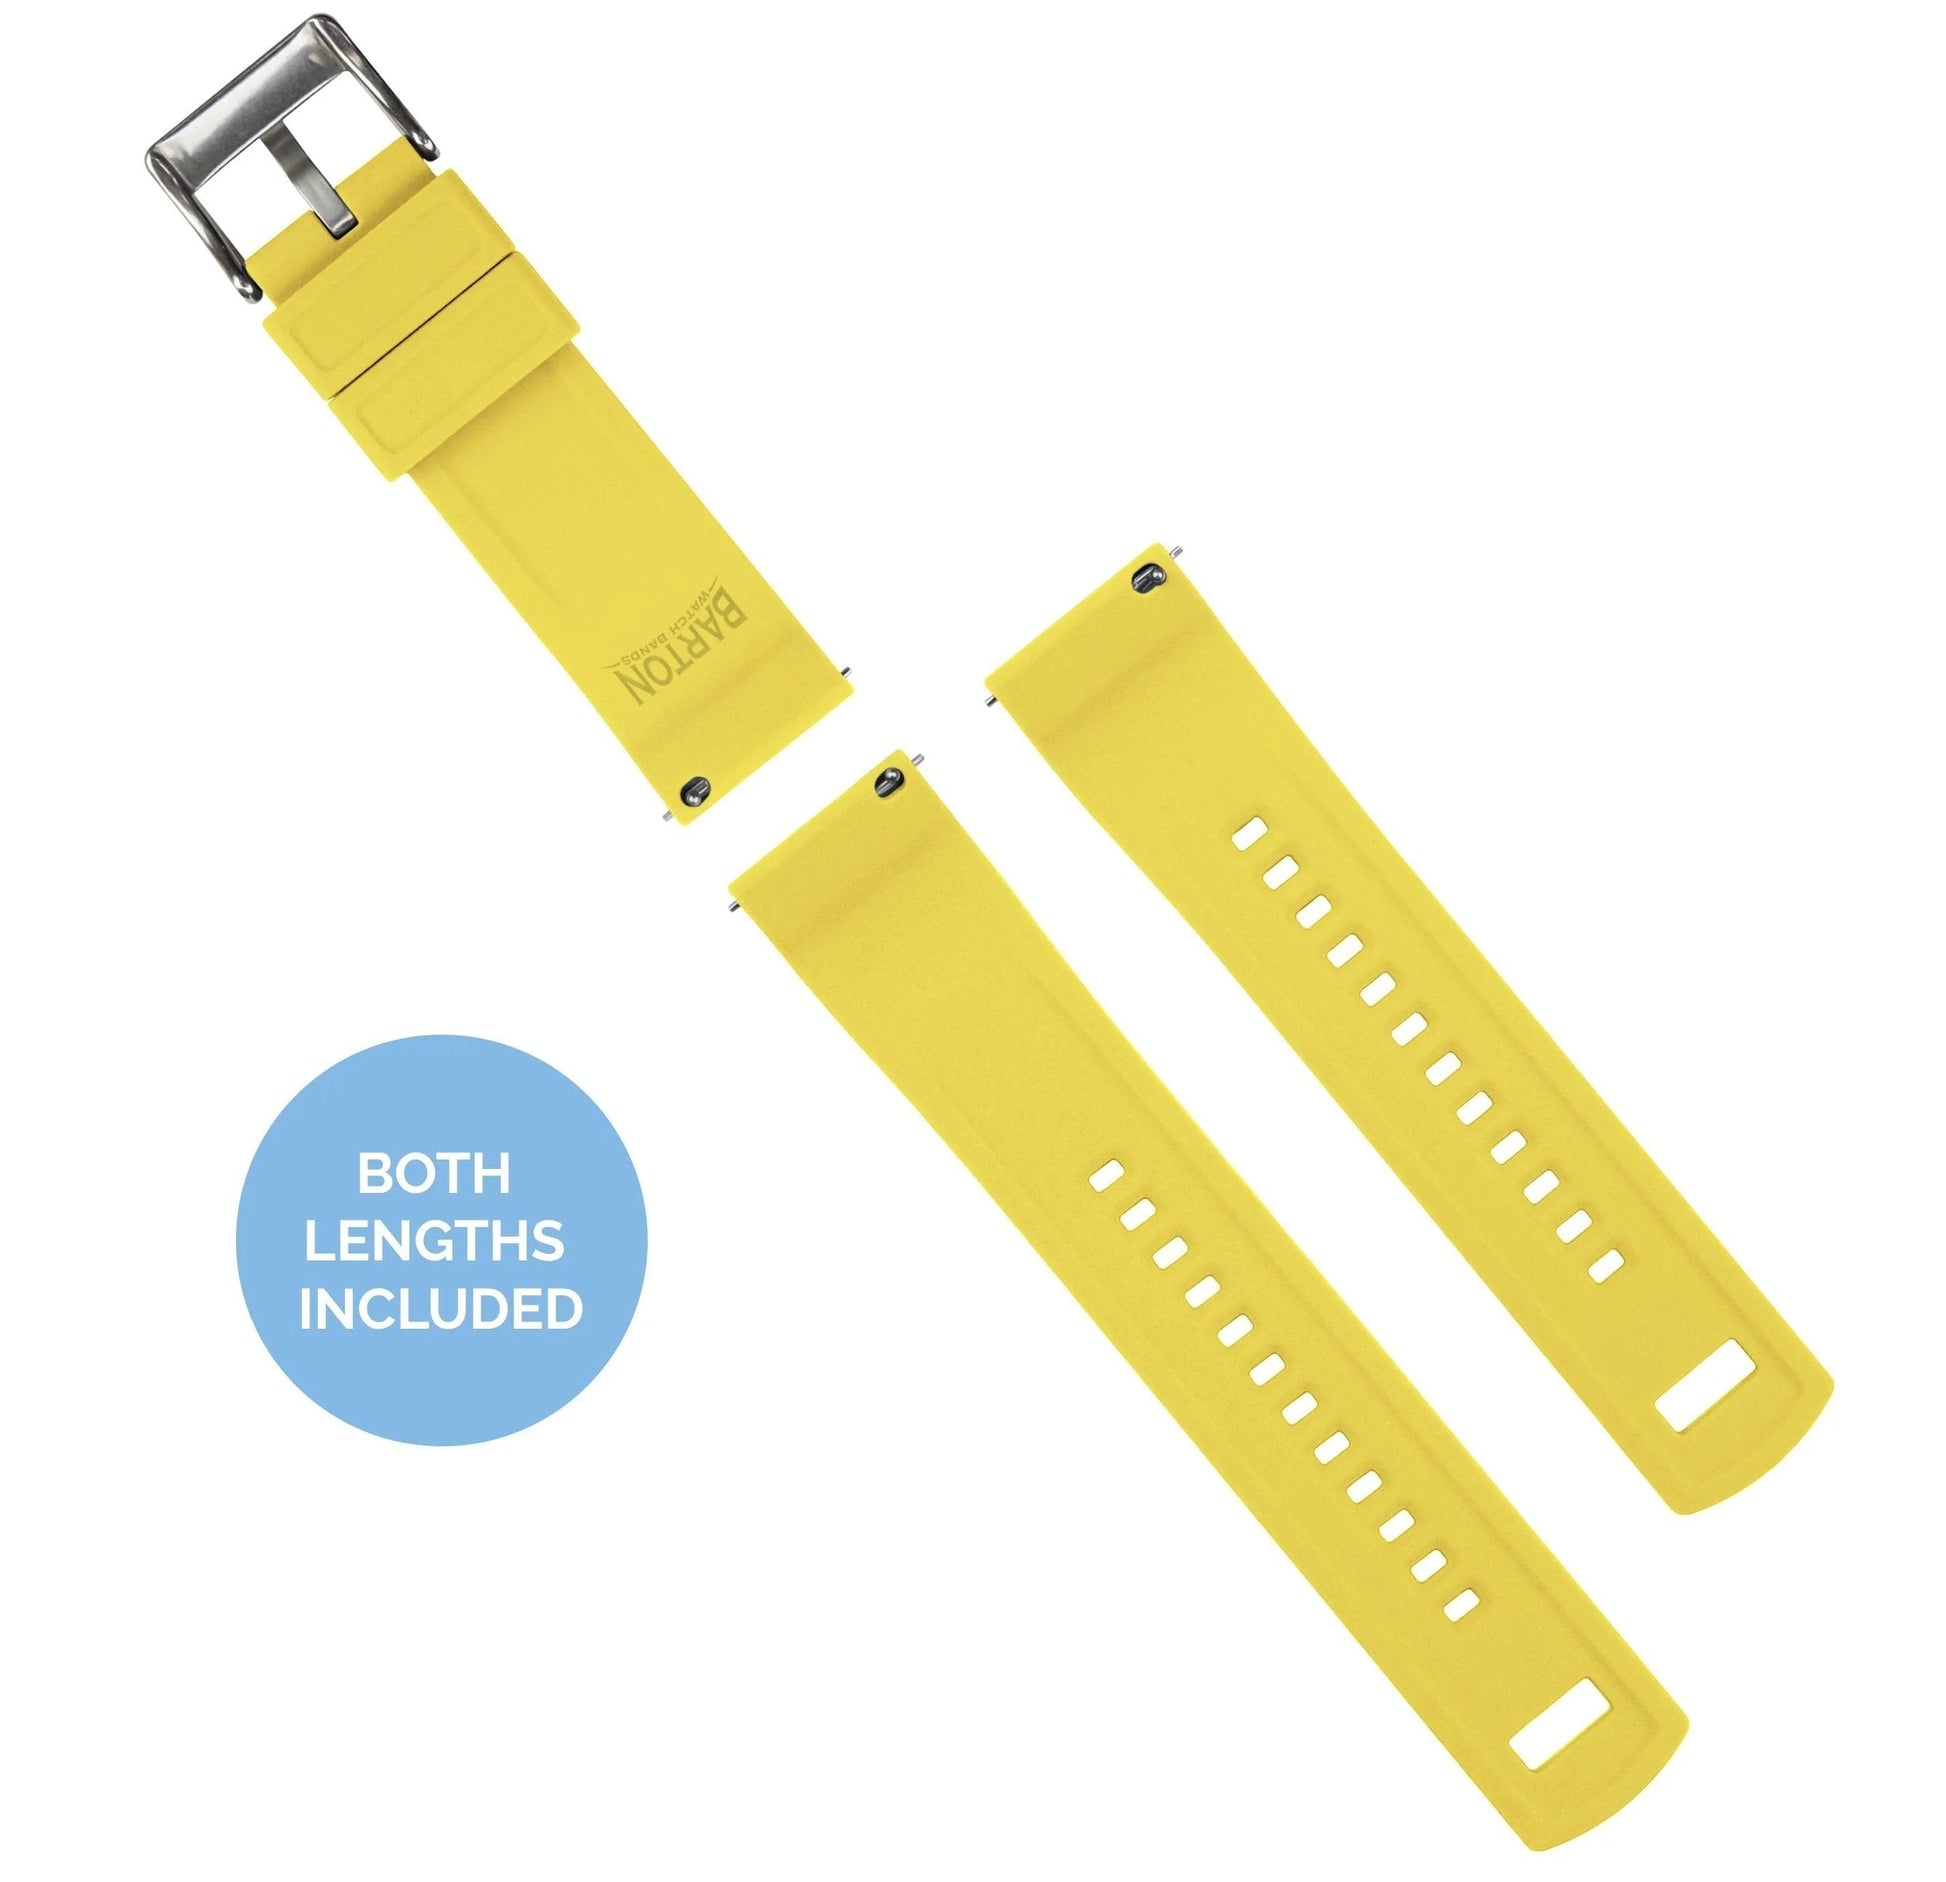 Samsung Galaxy Watch | Elite Silicone | Black Top / Yellow Bottom - Barton Watch Bands